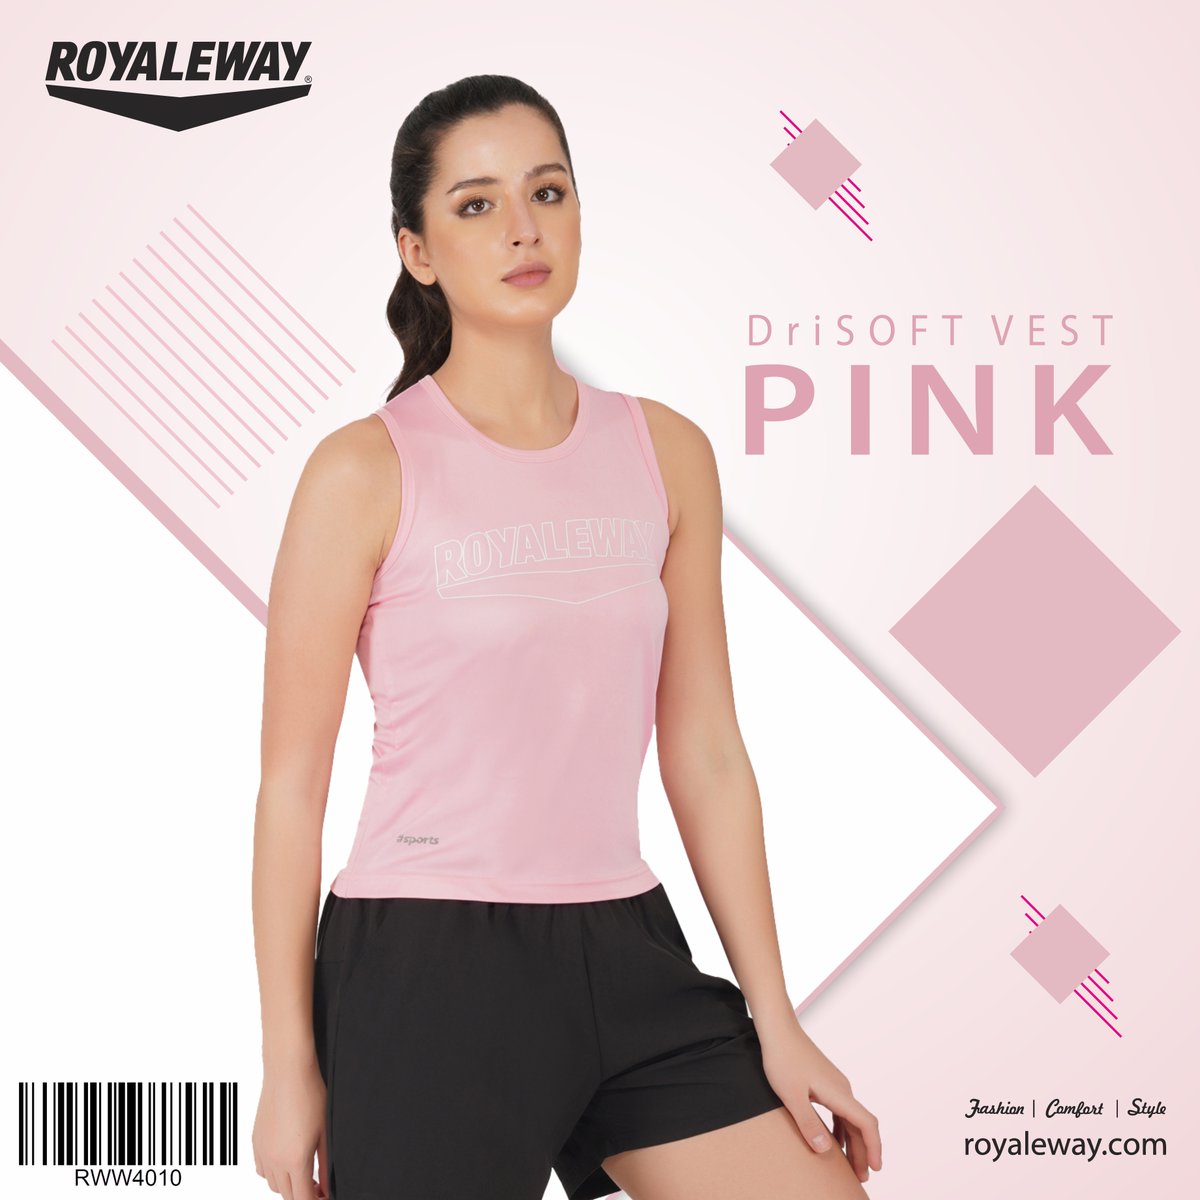 DriSOFT Vest Sando Tank top Sleeveless Pink Women Girls RWW4010: The Ultimate Royalway Fashion Statement

Buy now : royaleway.com/products/rww40…

#royaleway #liveyourway #fashion #comfort #style #women #tanktop #pink